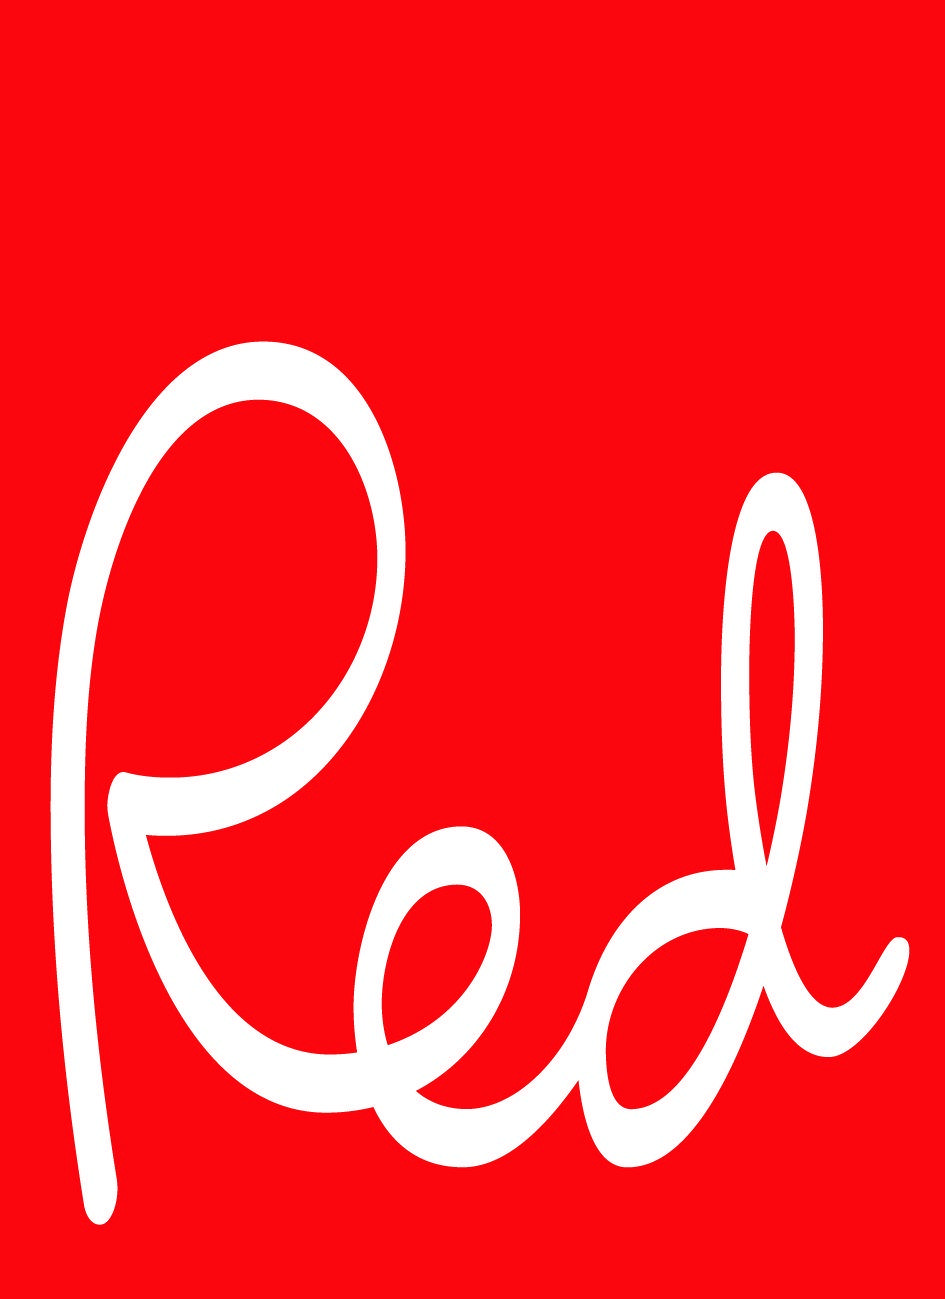 RedR Logo - Redr Logo | www.topsimages.com